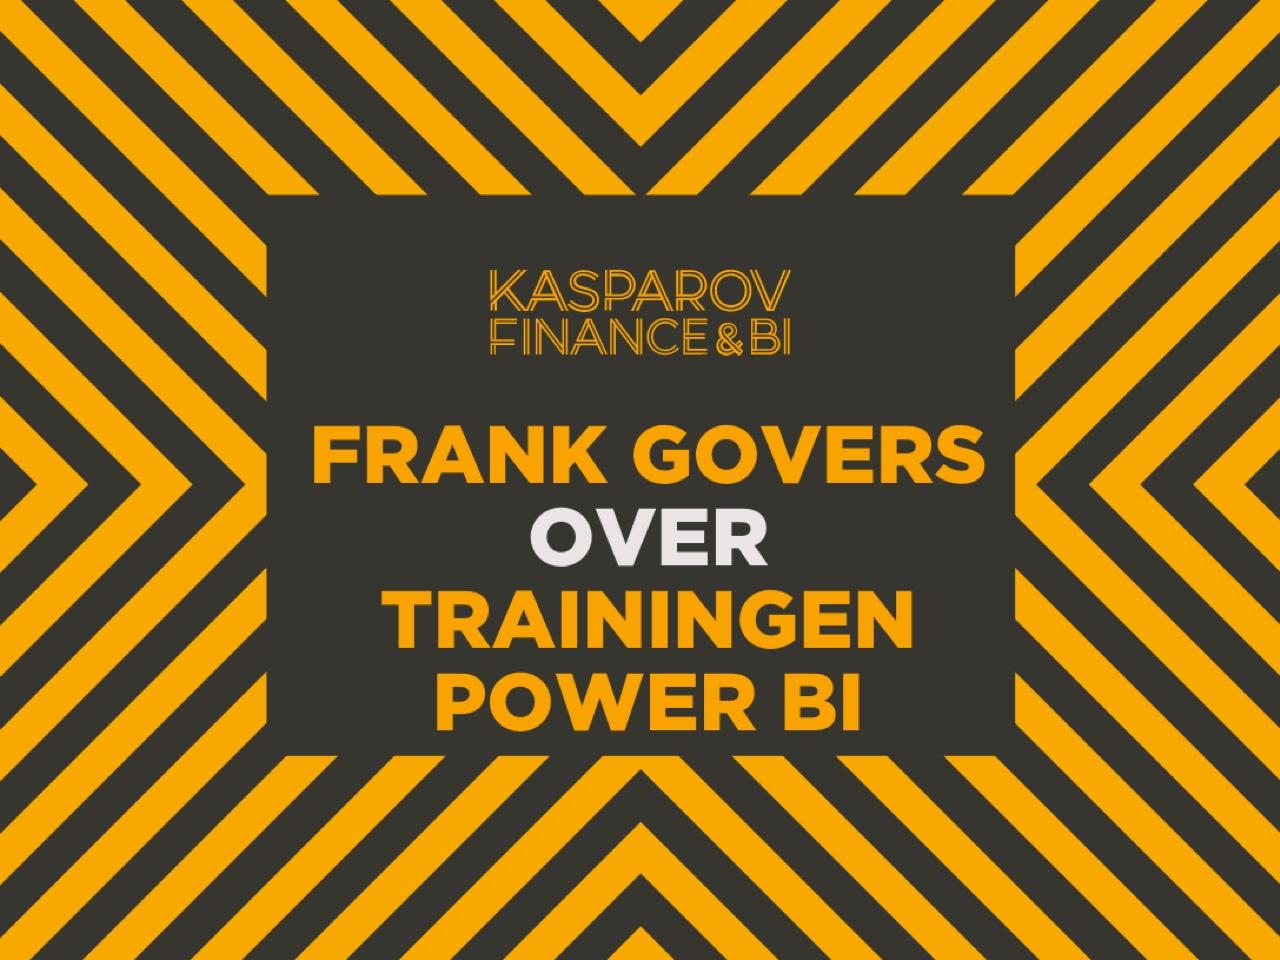 Power BI kasparov trainingen frank govers